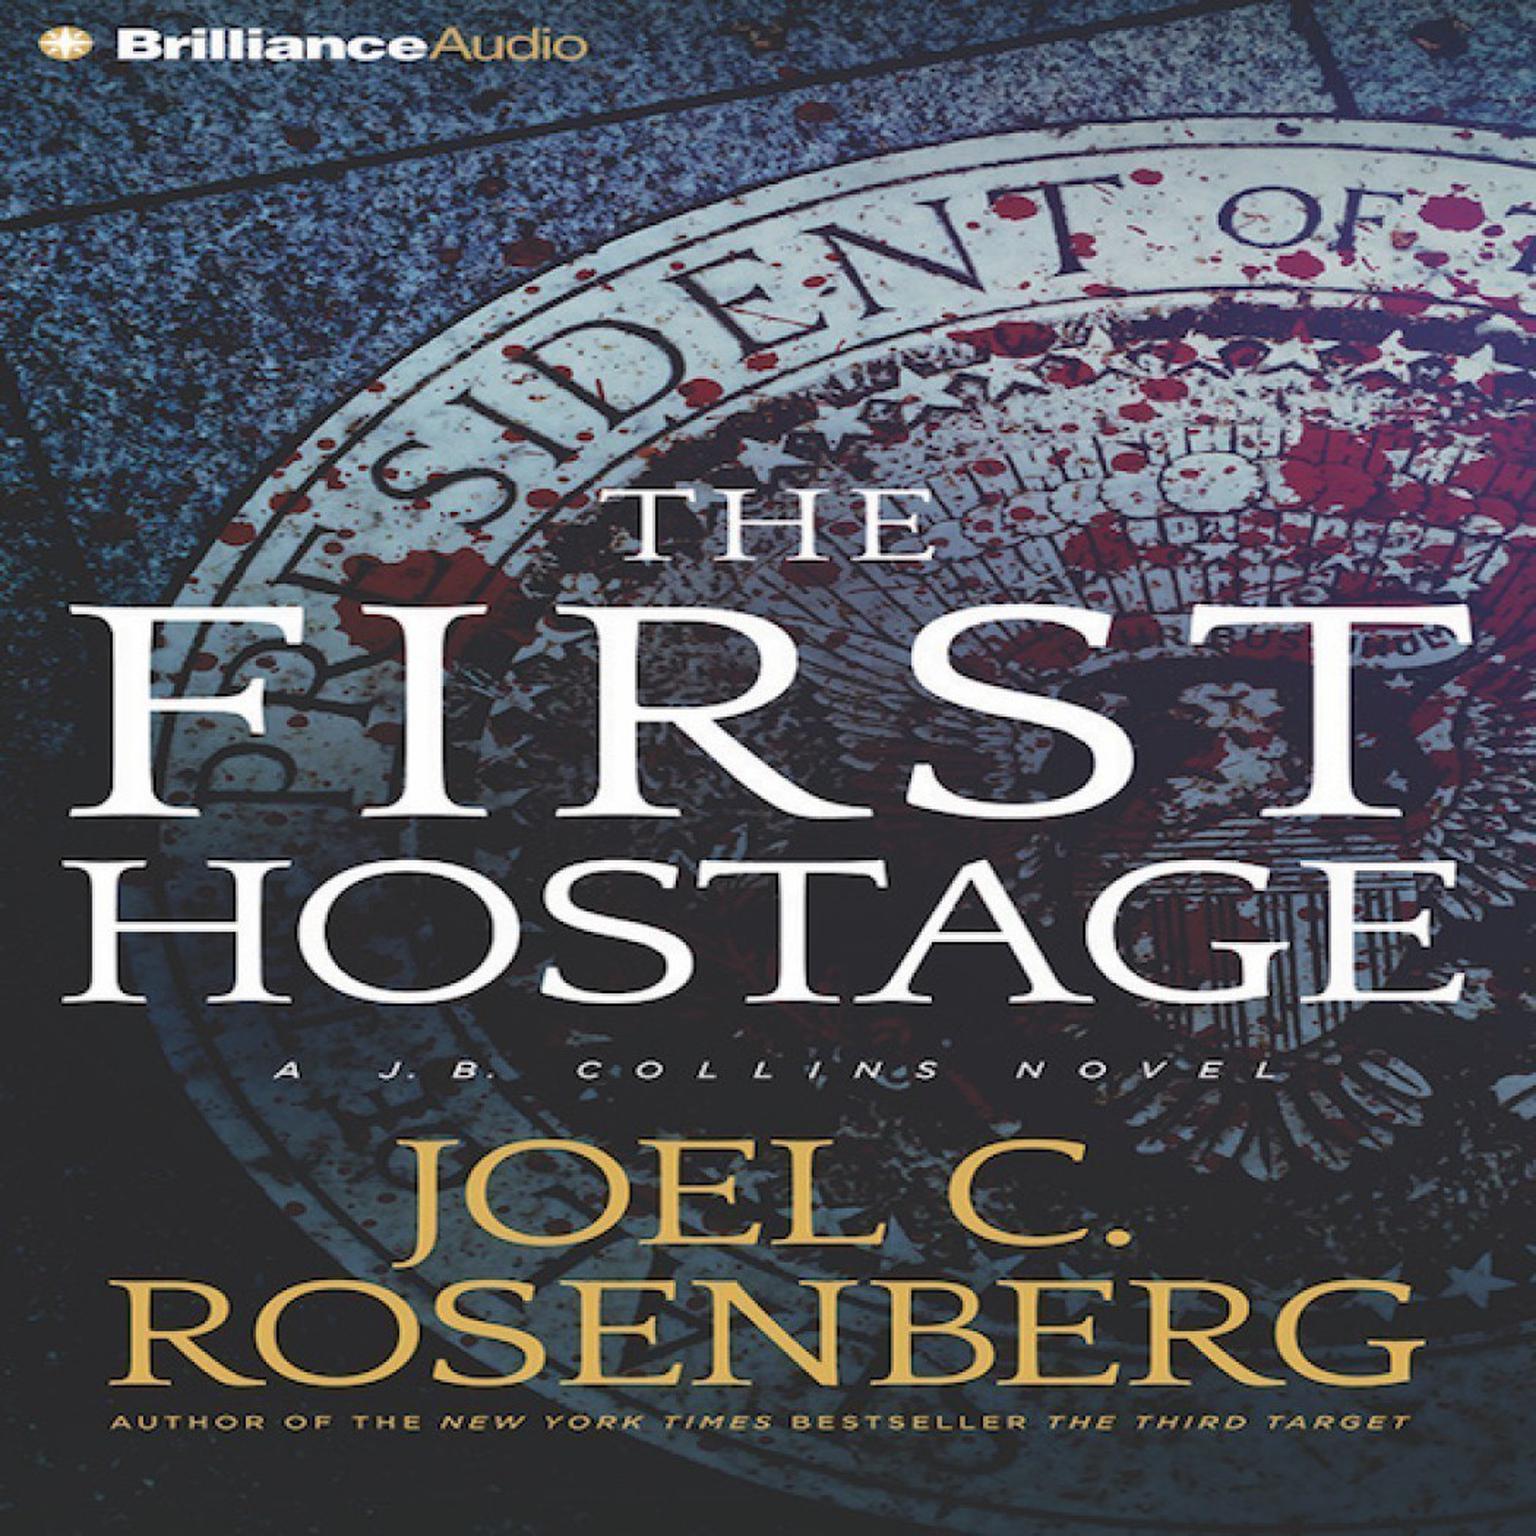 The First Hostage (Abridged): A J. B. Collins Novel Audiobook, by Joel C. Rosenberg